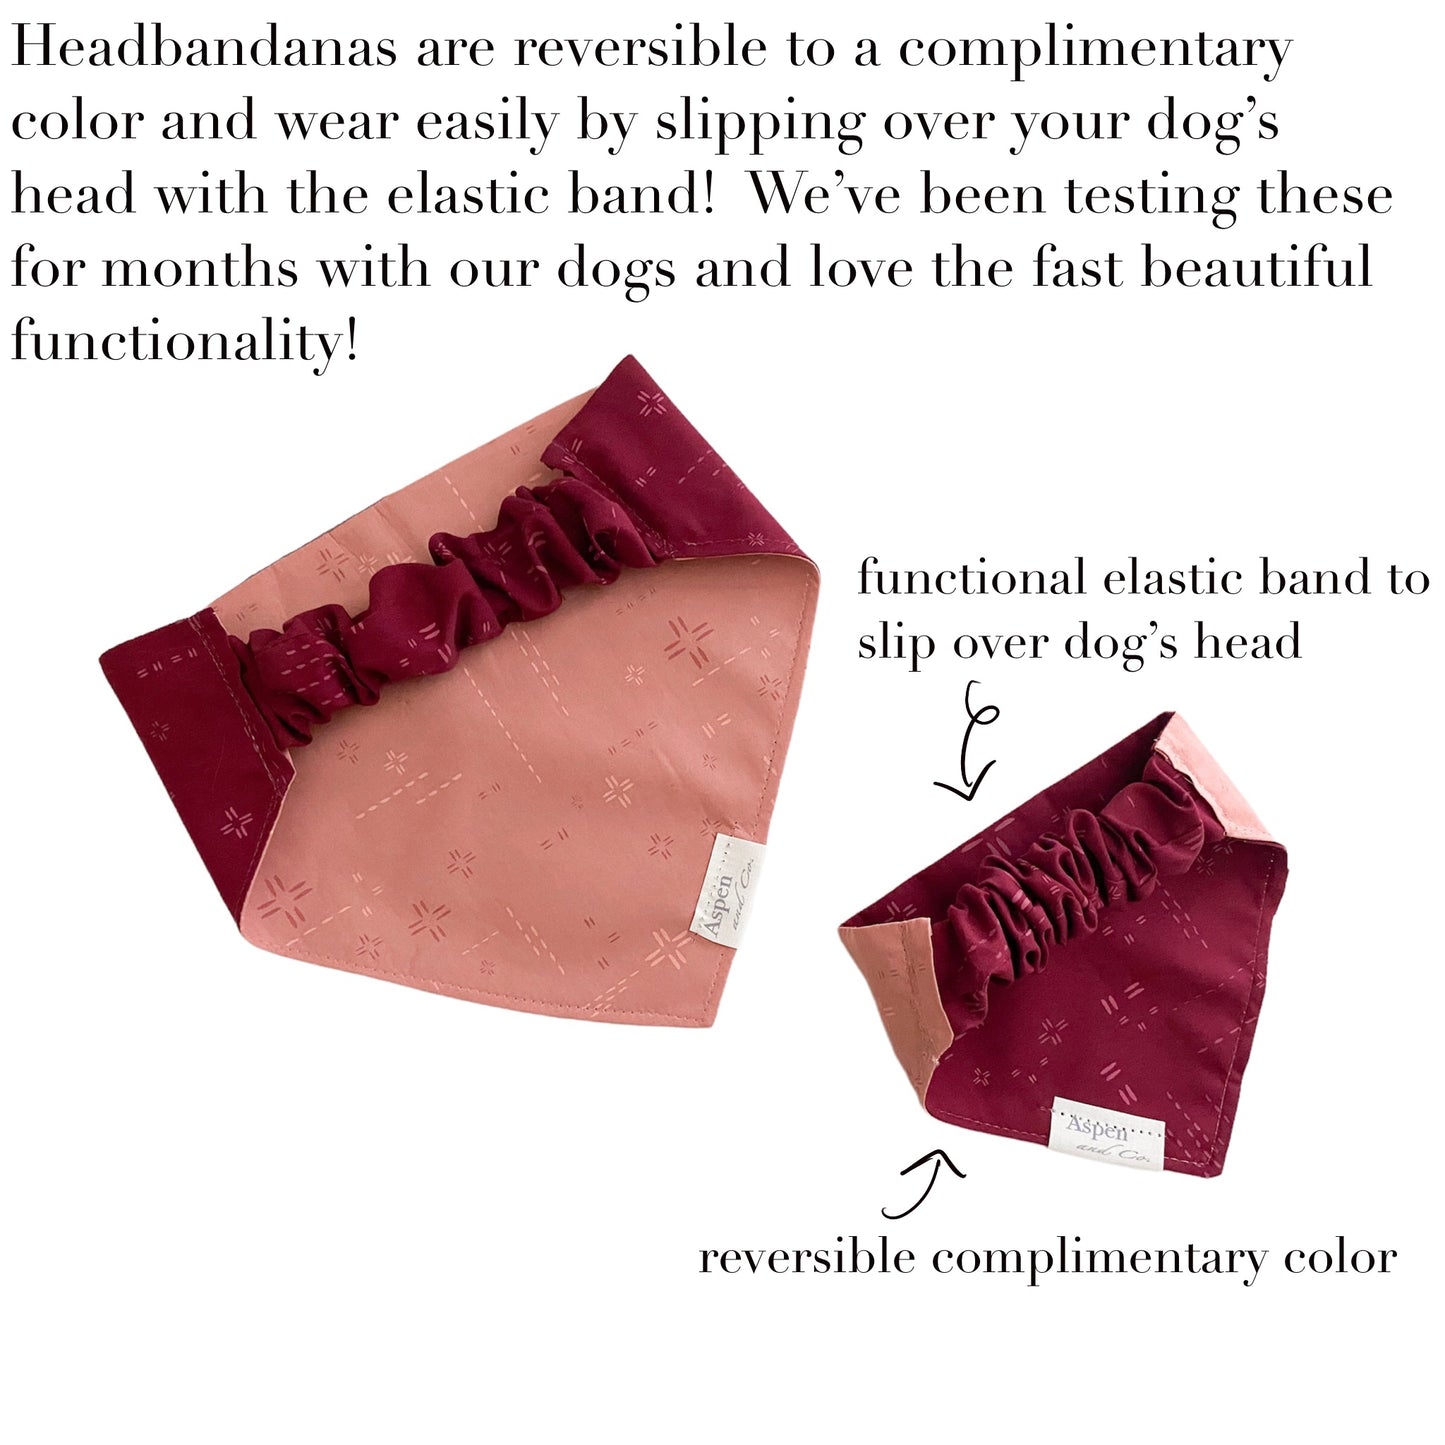 Reversible Headbandana - Burgundy and Pink (Elastic Dog Bandana)